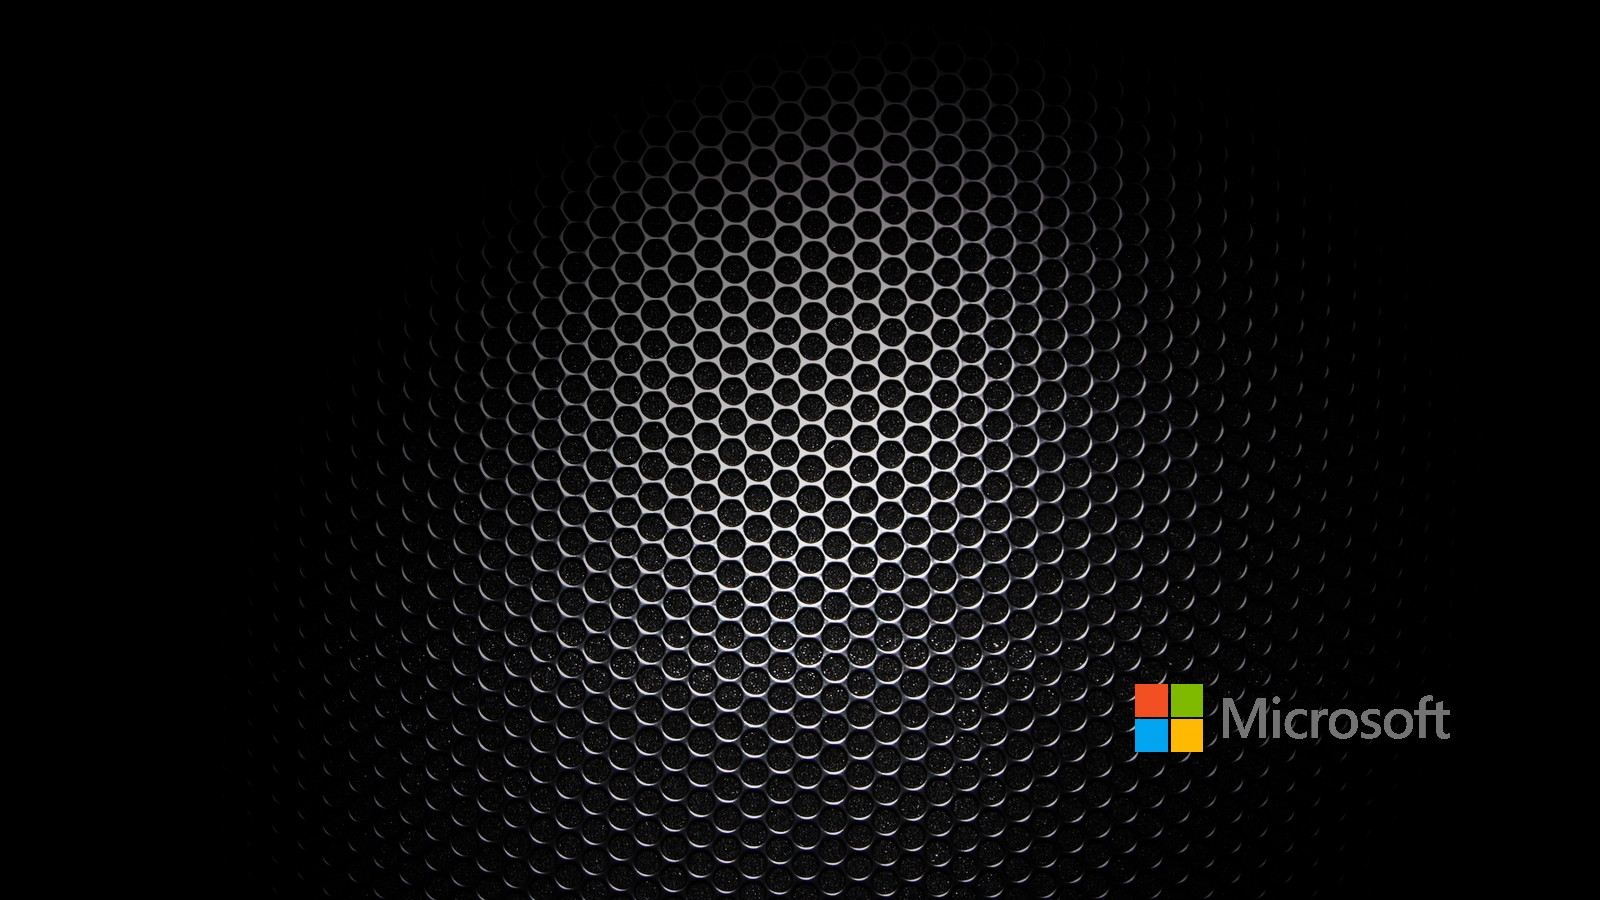 Microsoft Wallpaper Image For